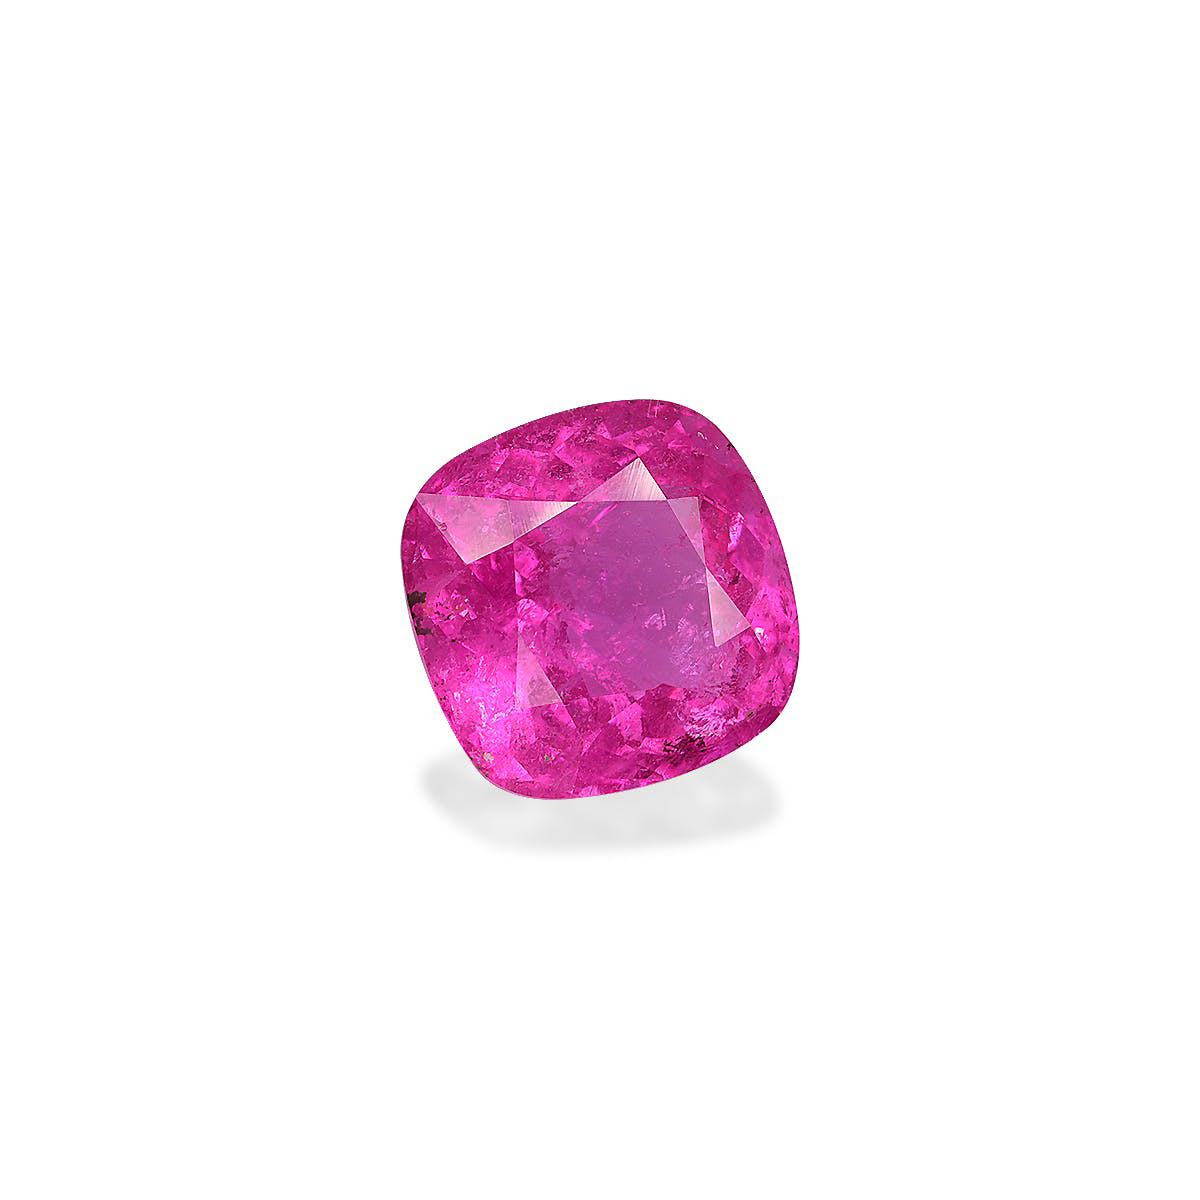 Picture of Vivid Pink Rubellite Tourmaline 6.97ct - 12mm (RL1212)